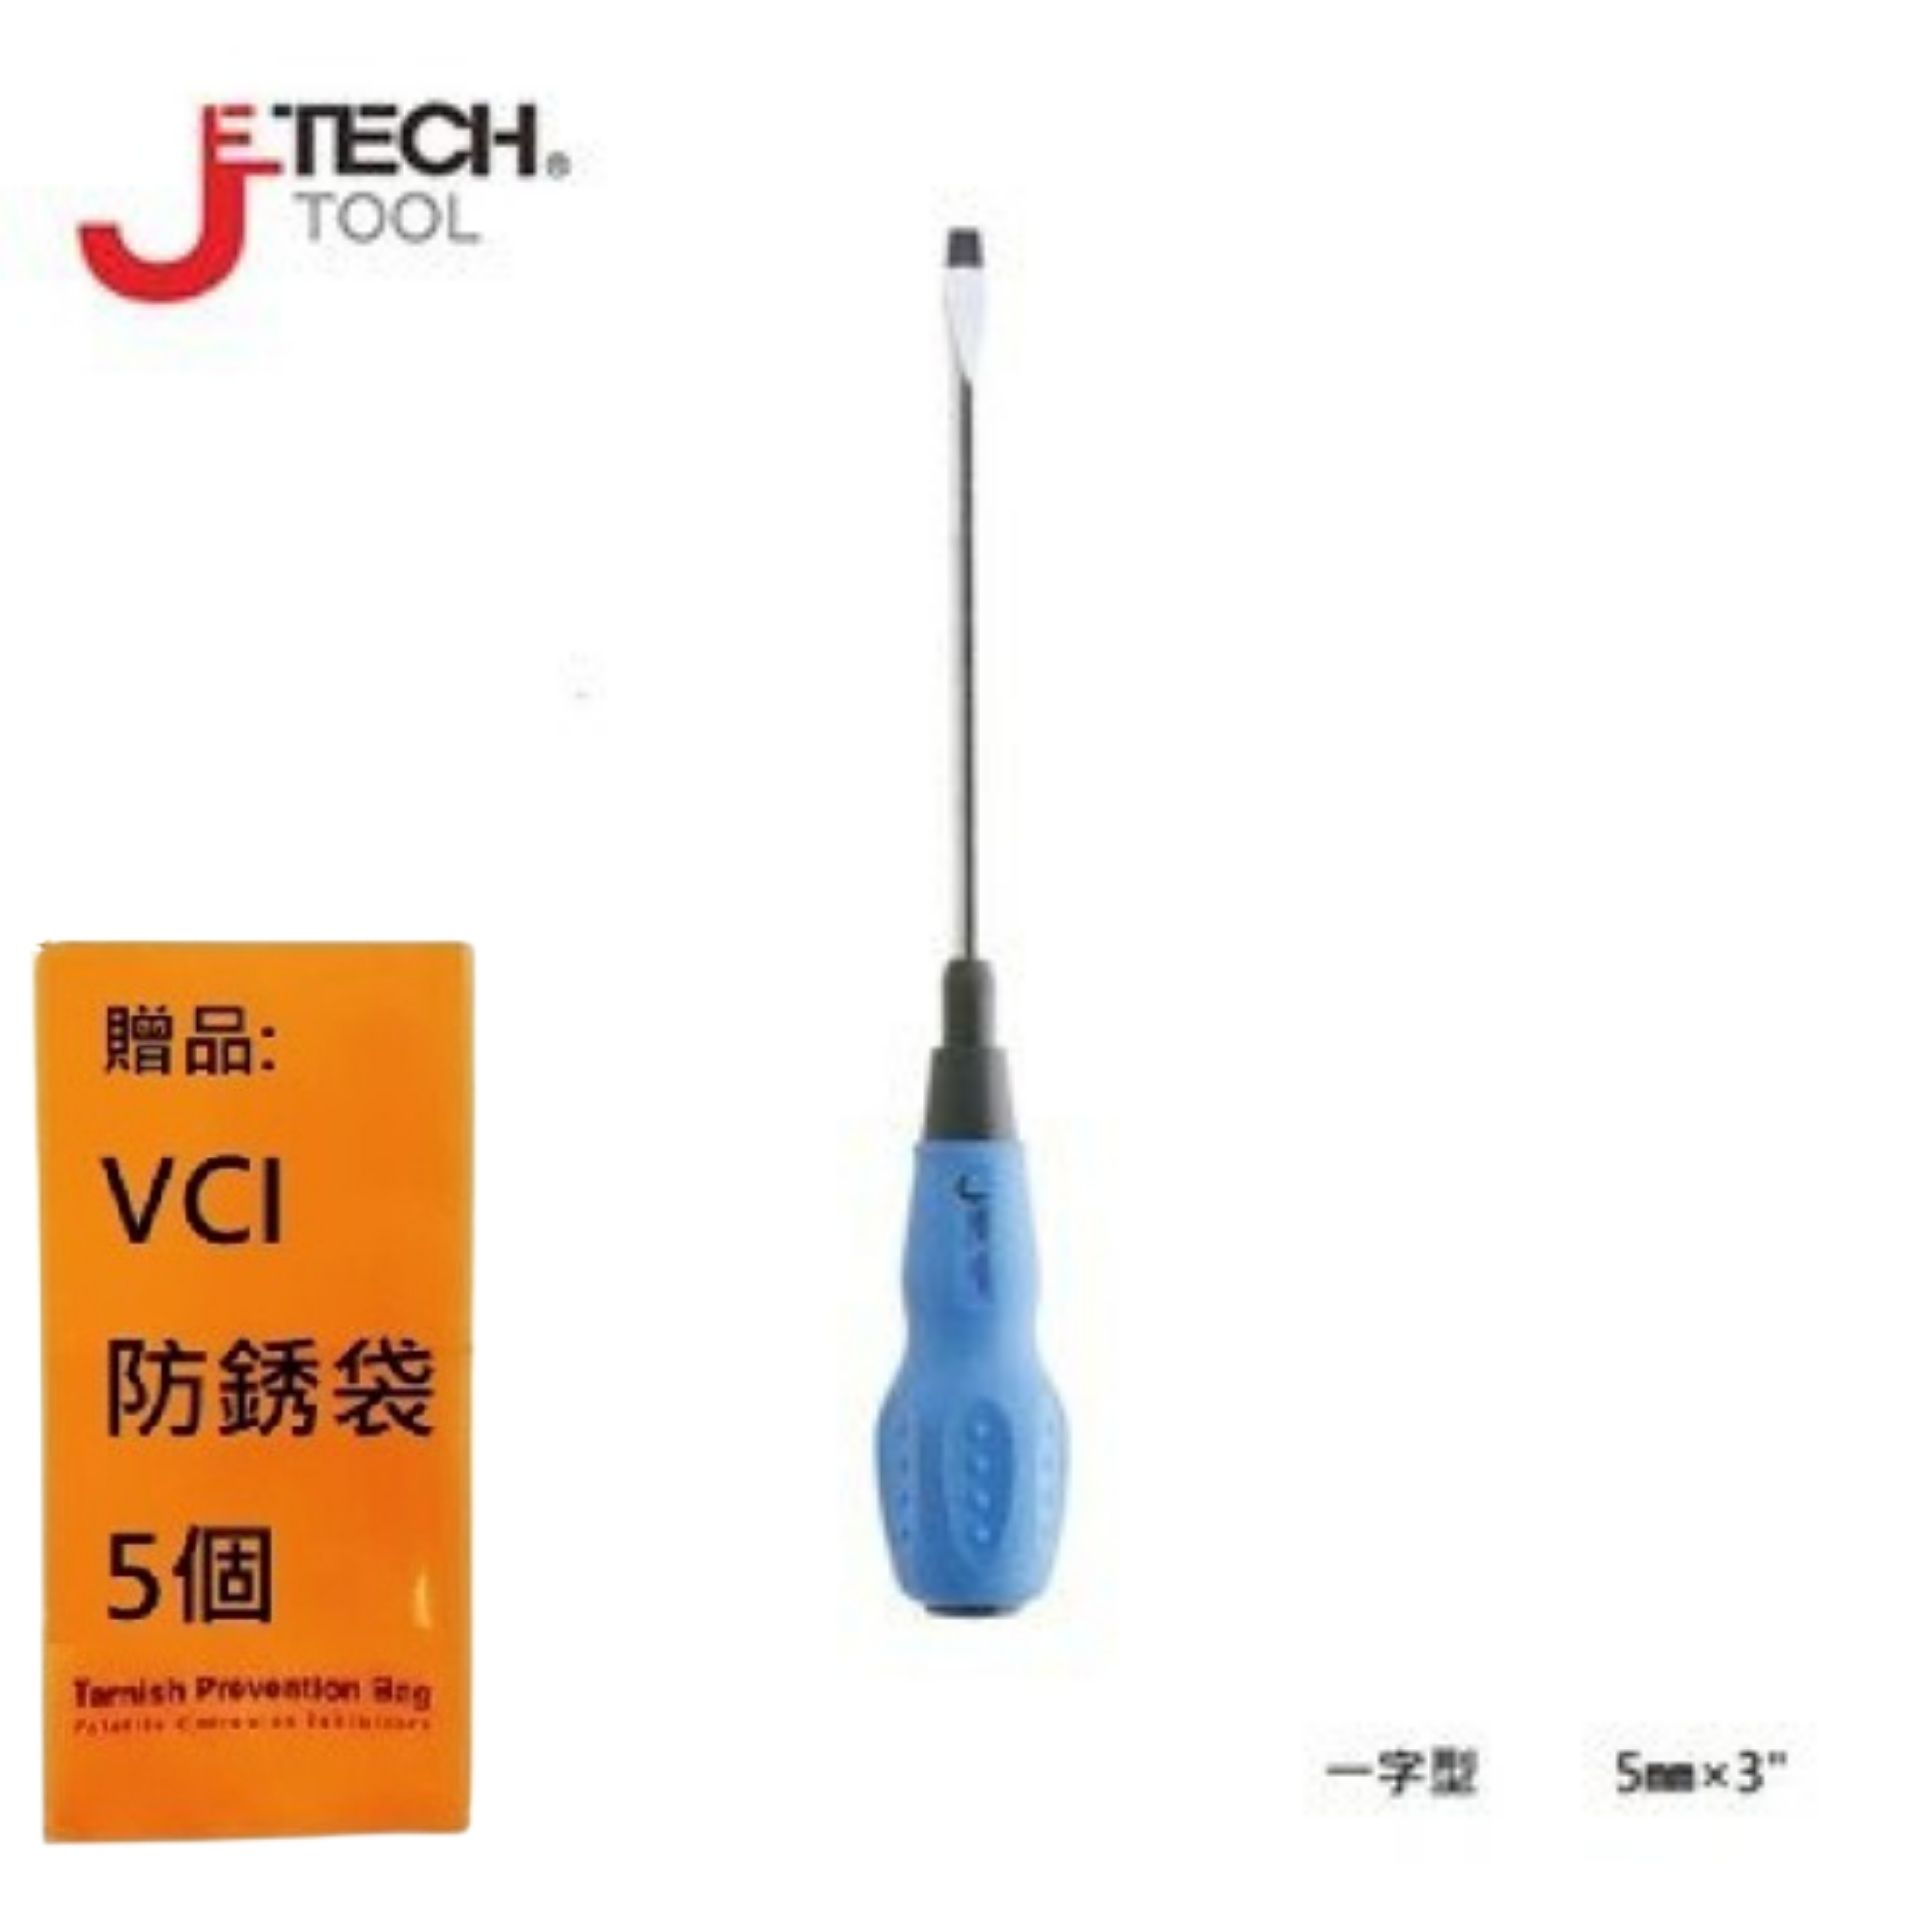 【JETECH】軟柄強力起子 一字型 5㎜×3＂-GC-ST5-075(-)-1450 日本設計，符合亞洲手型